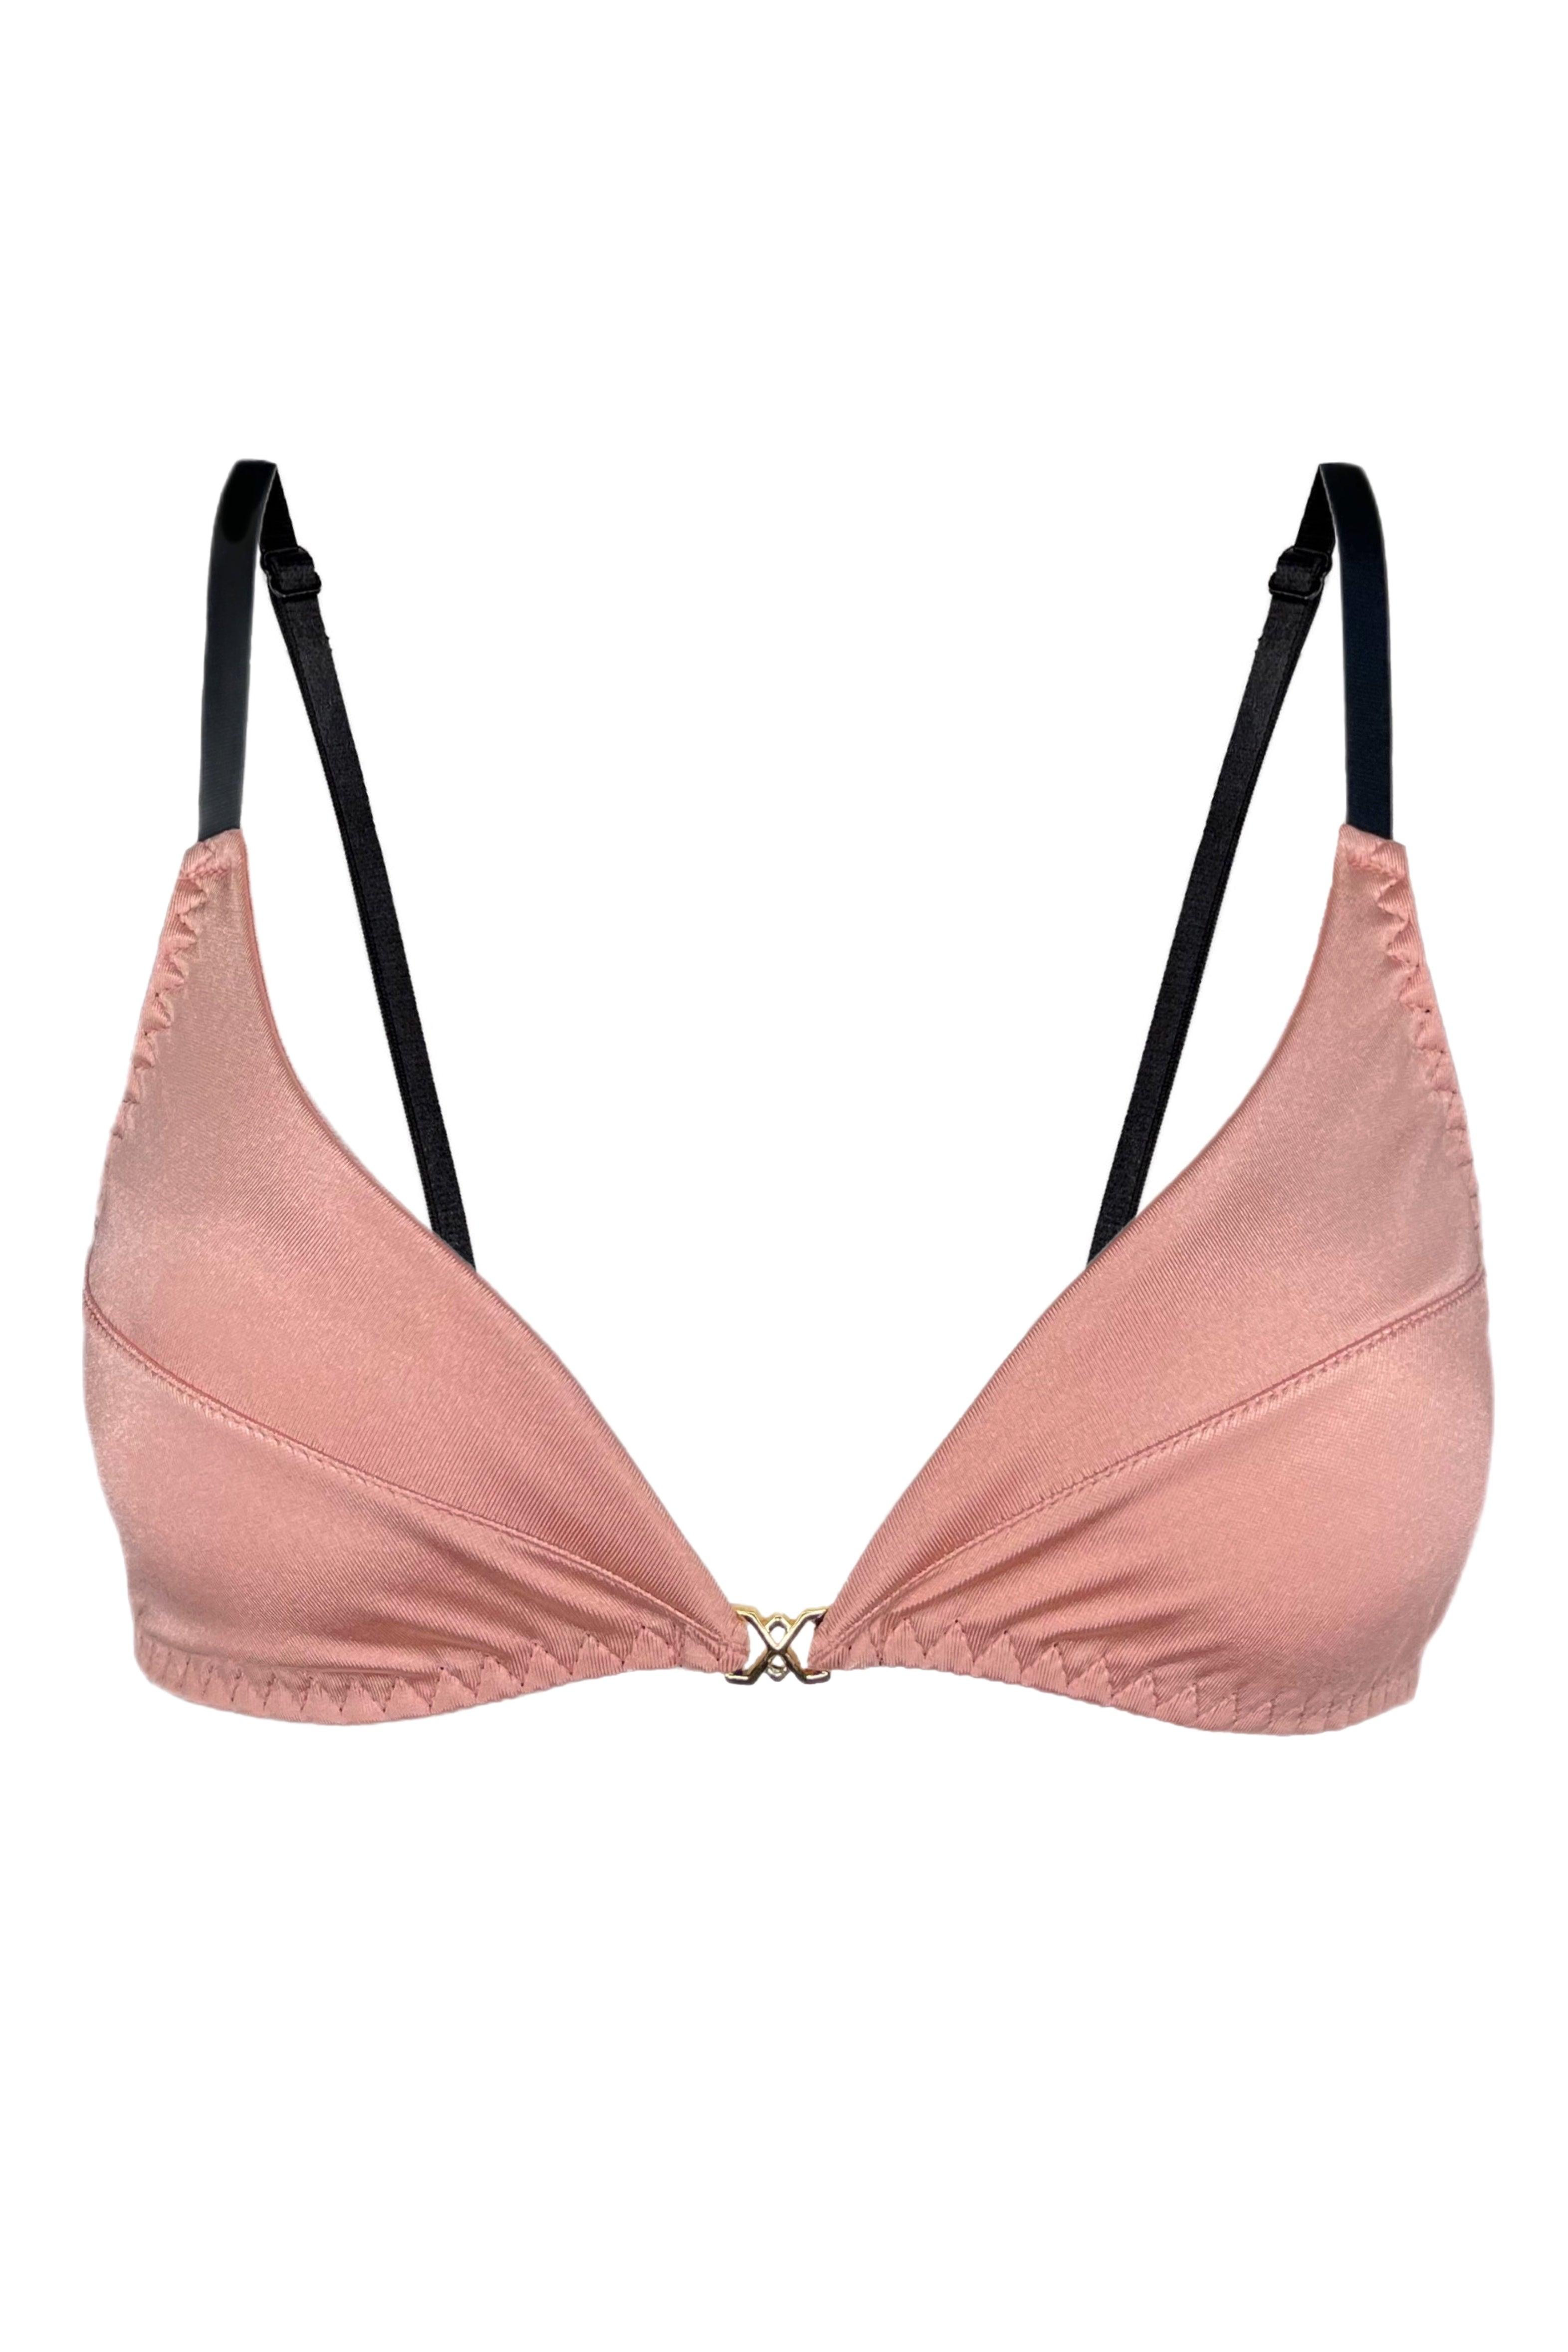 Valessa Gloss pink soft triangle bra - yesUndress